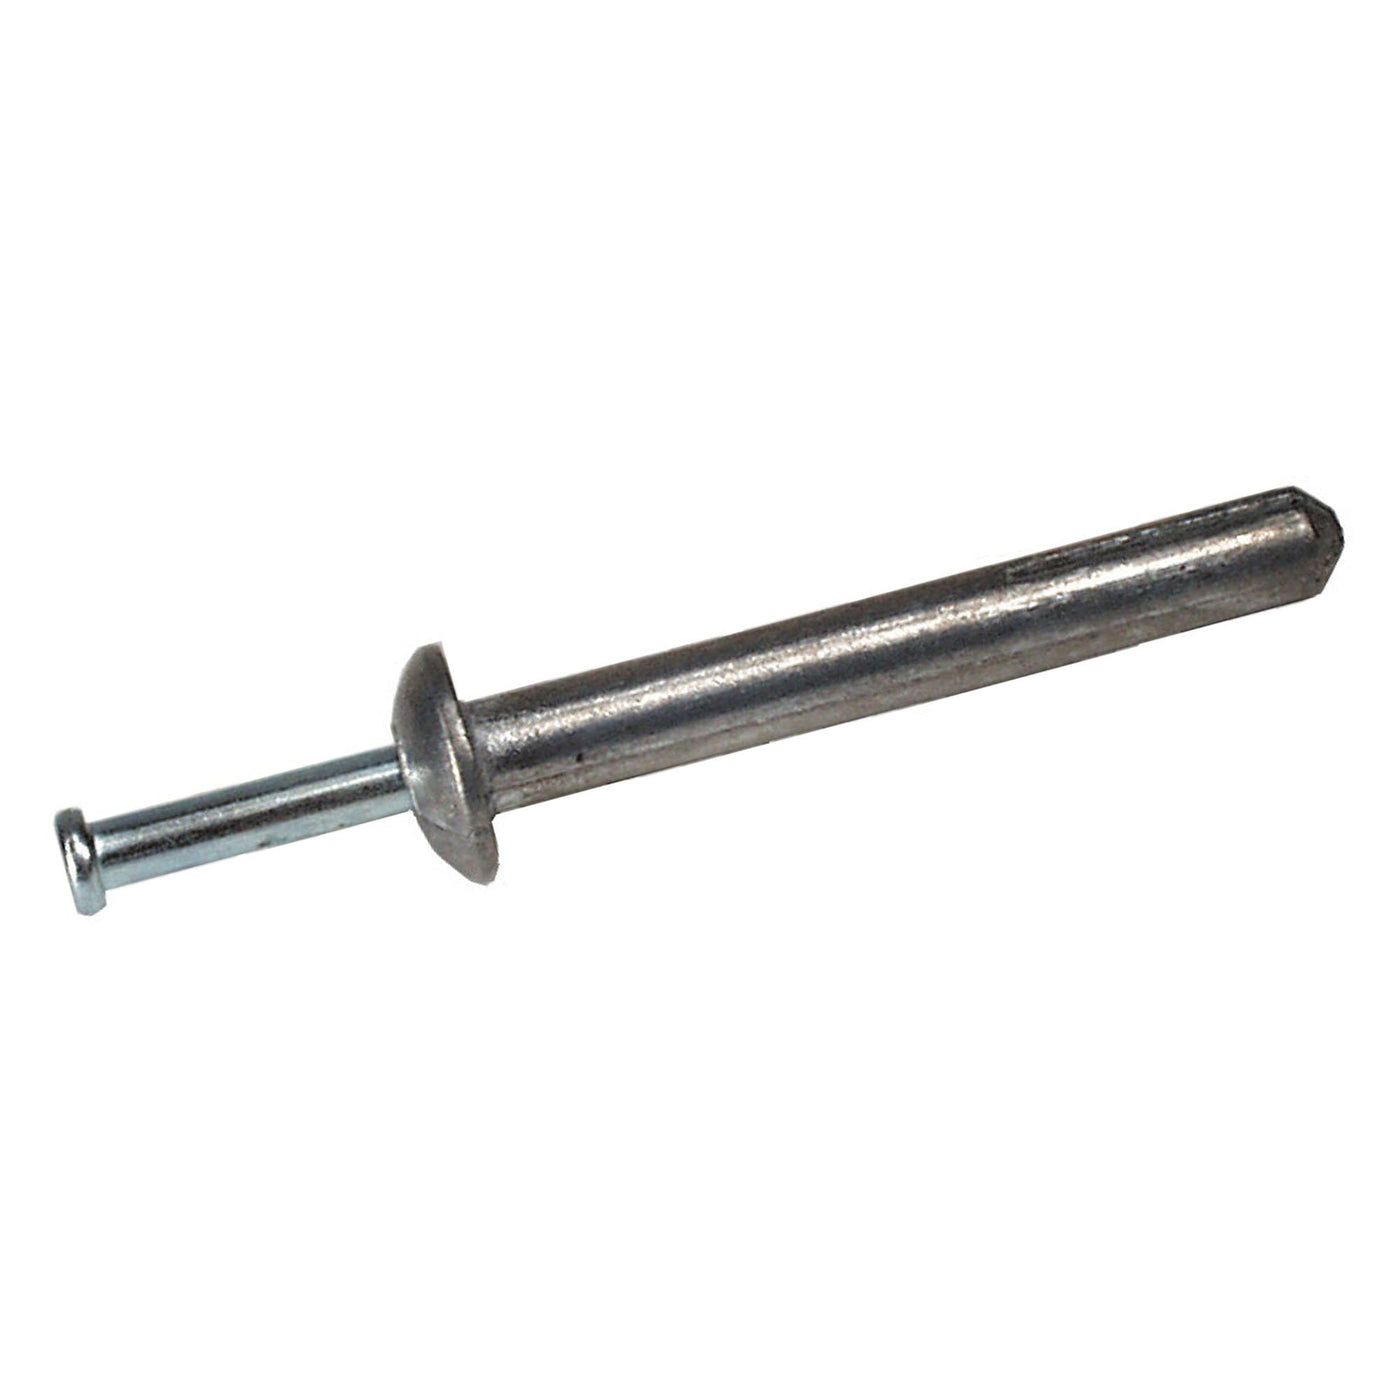 1/4 x 2 Simpson Zinc Nailon™ Pin Drive Anchor Mushroom Head 304 Stainless Steel Pin (100)